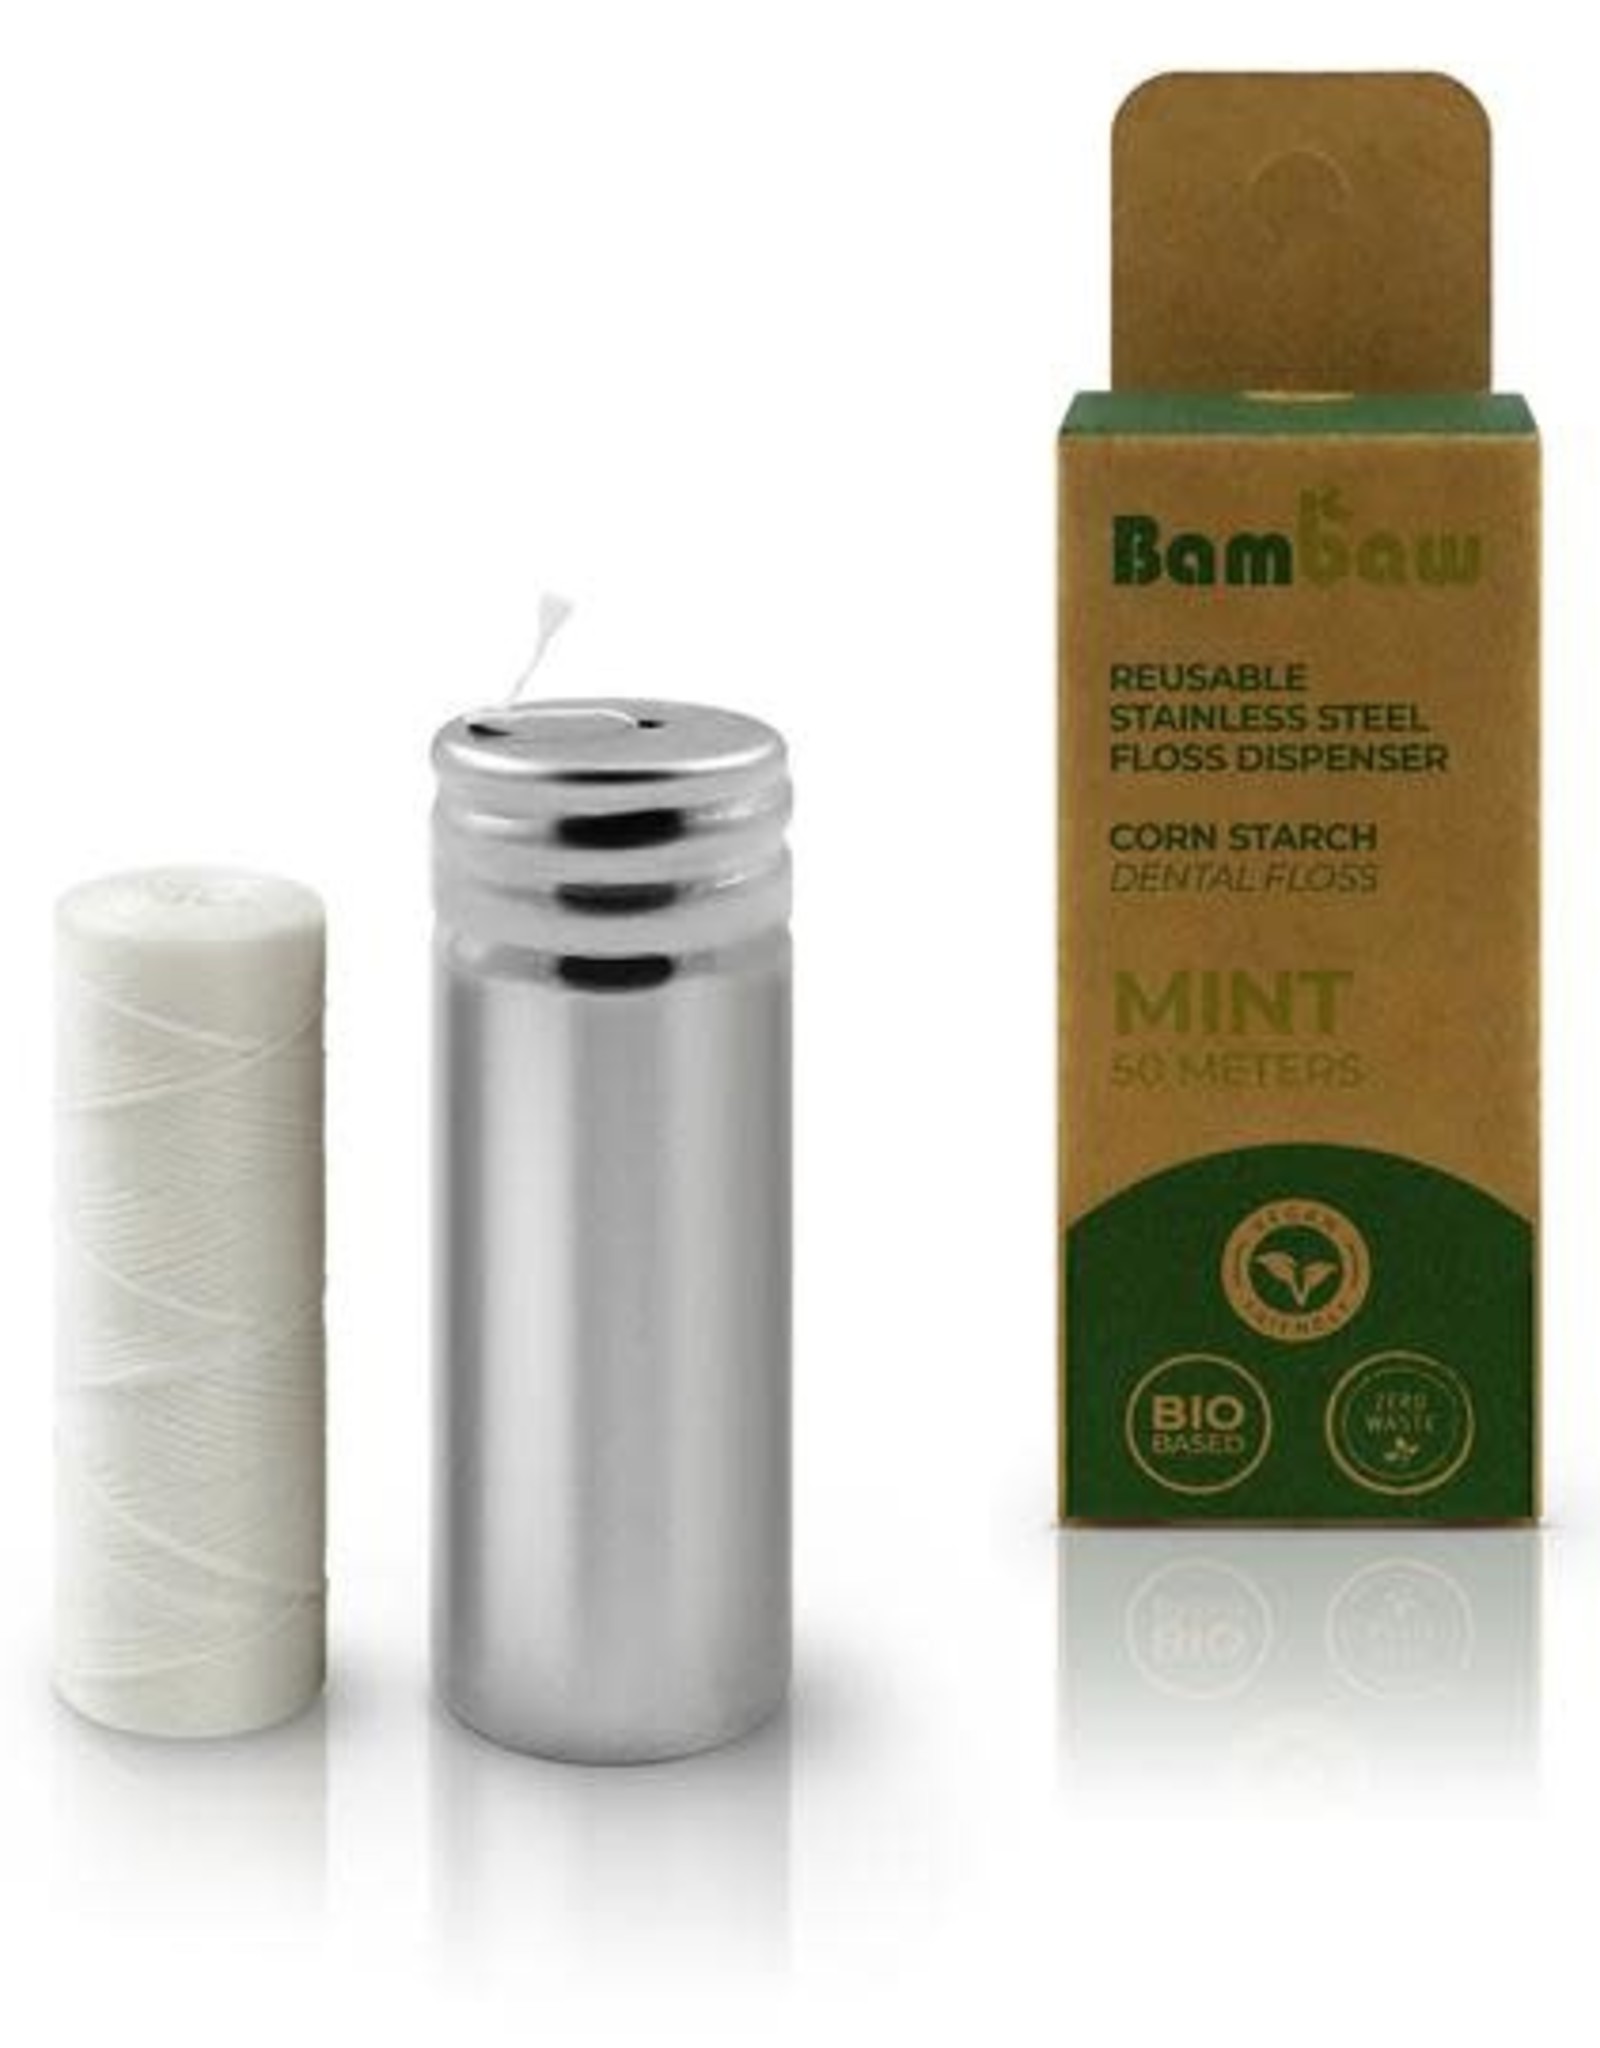 Bambaw Bambaw Corn Starch PLA Dental Floss - Mint 50m